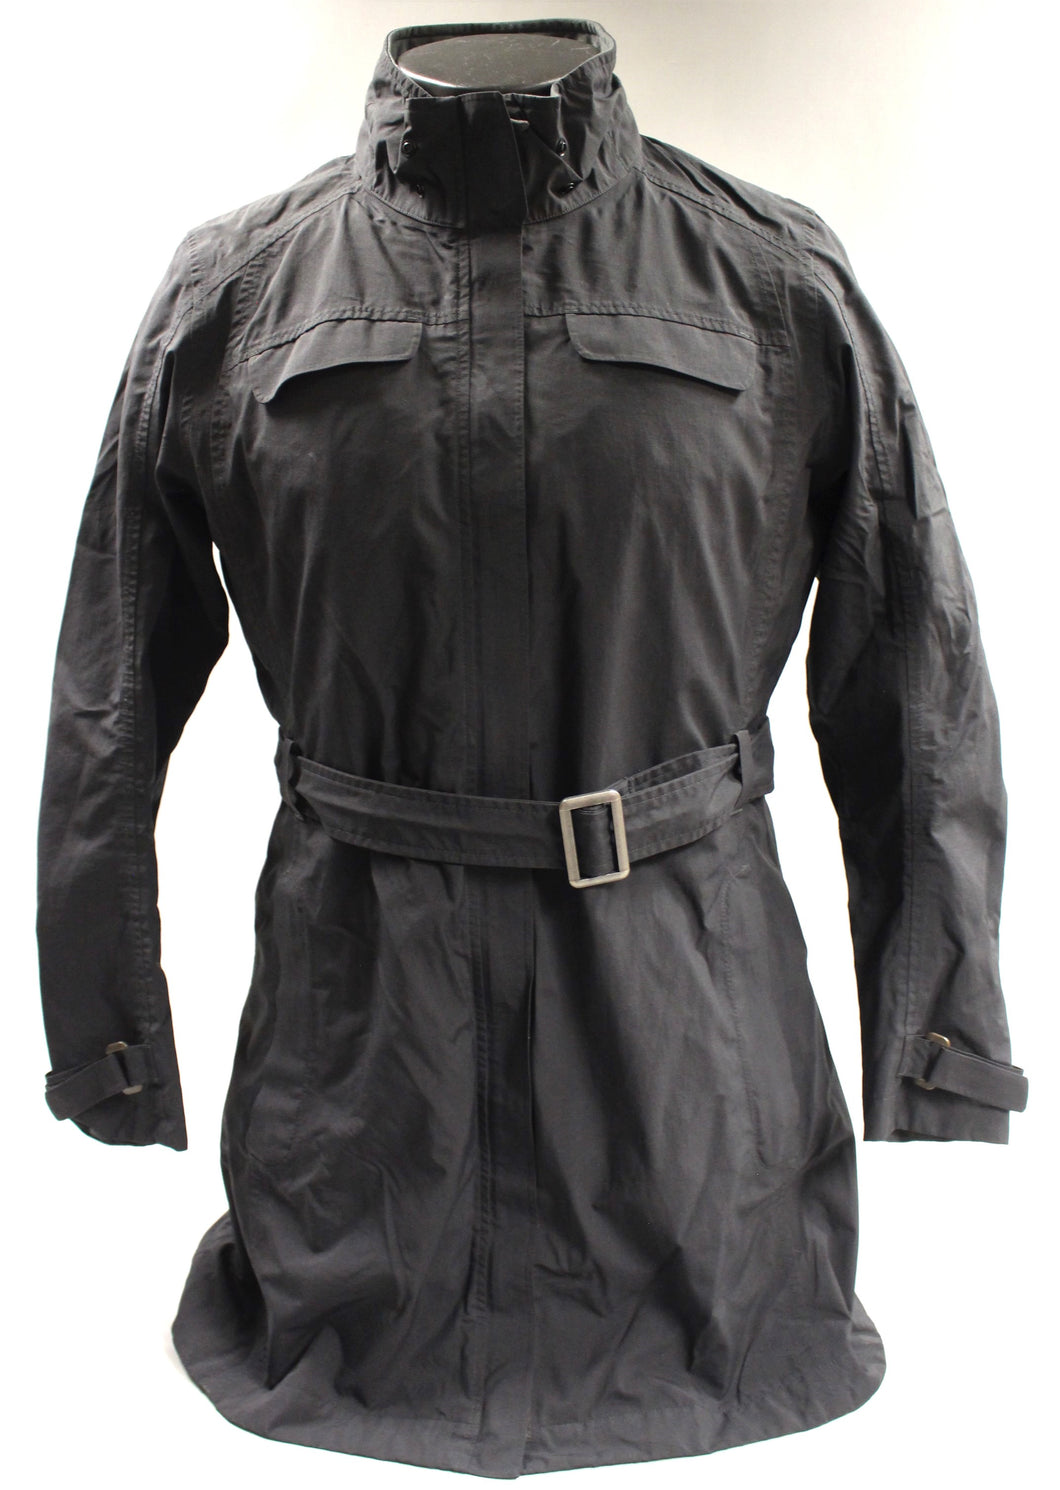 REI Women's La Selva Rain Jacket - Size: L - Black/Gray - Used